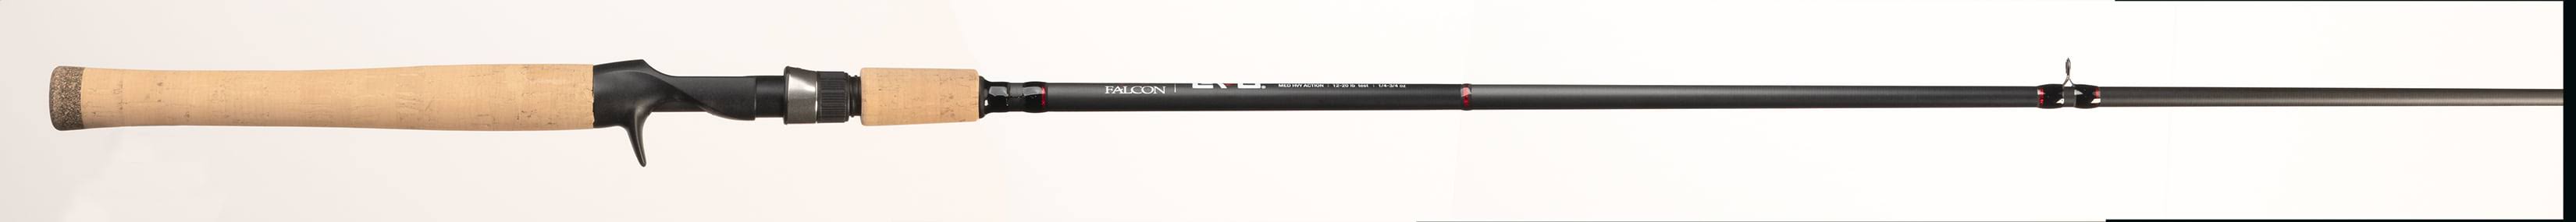 Falcon Rods Evo 6'8 inch Medium Heavy Action Casting Fishing Rod